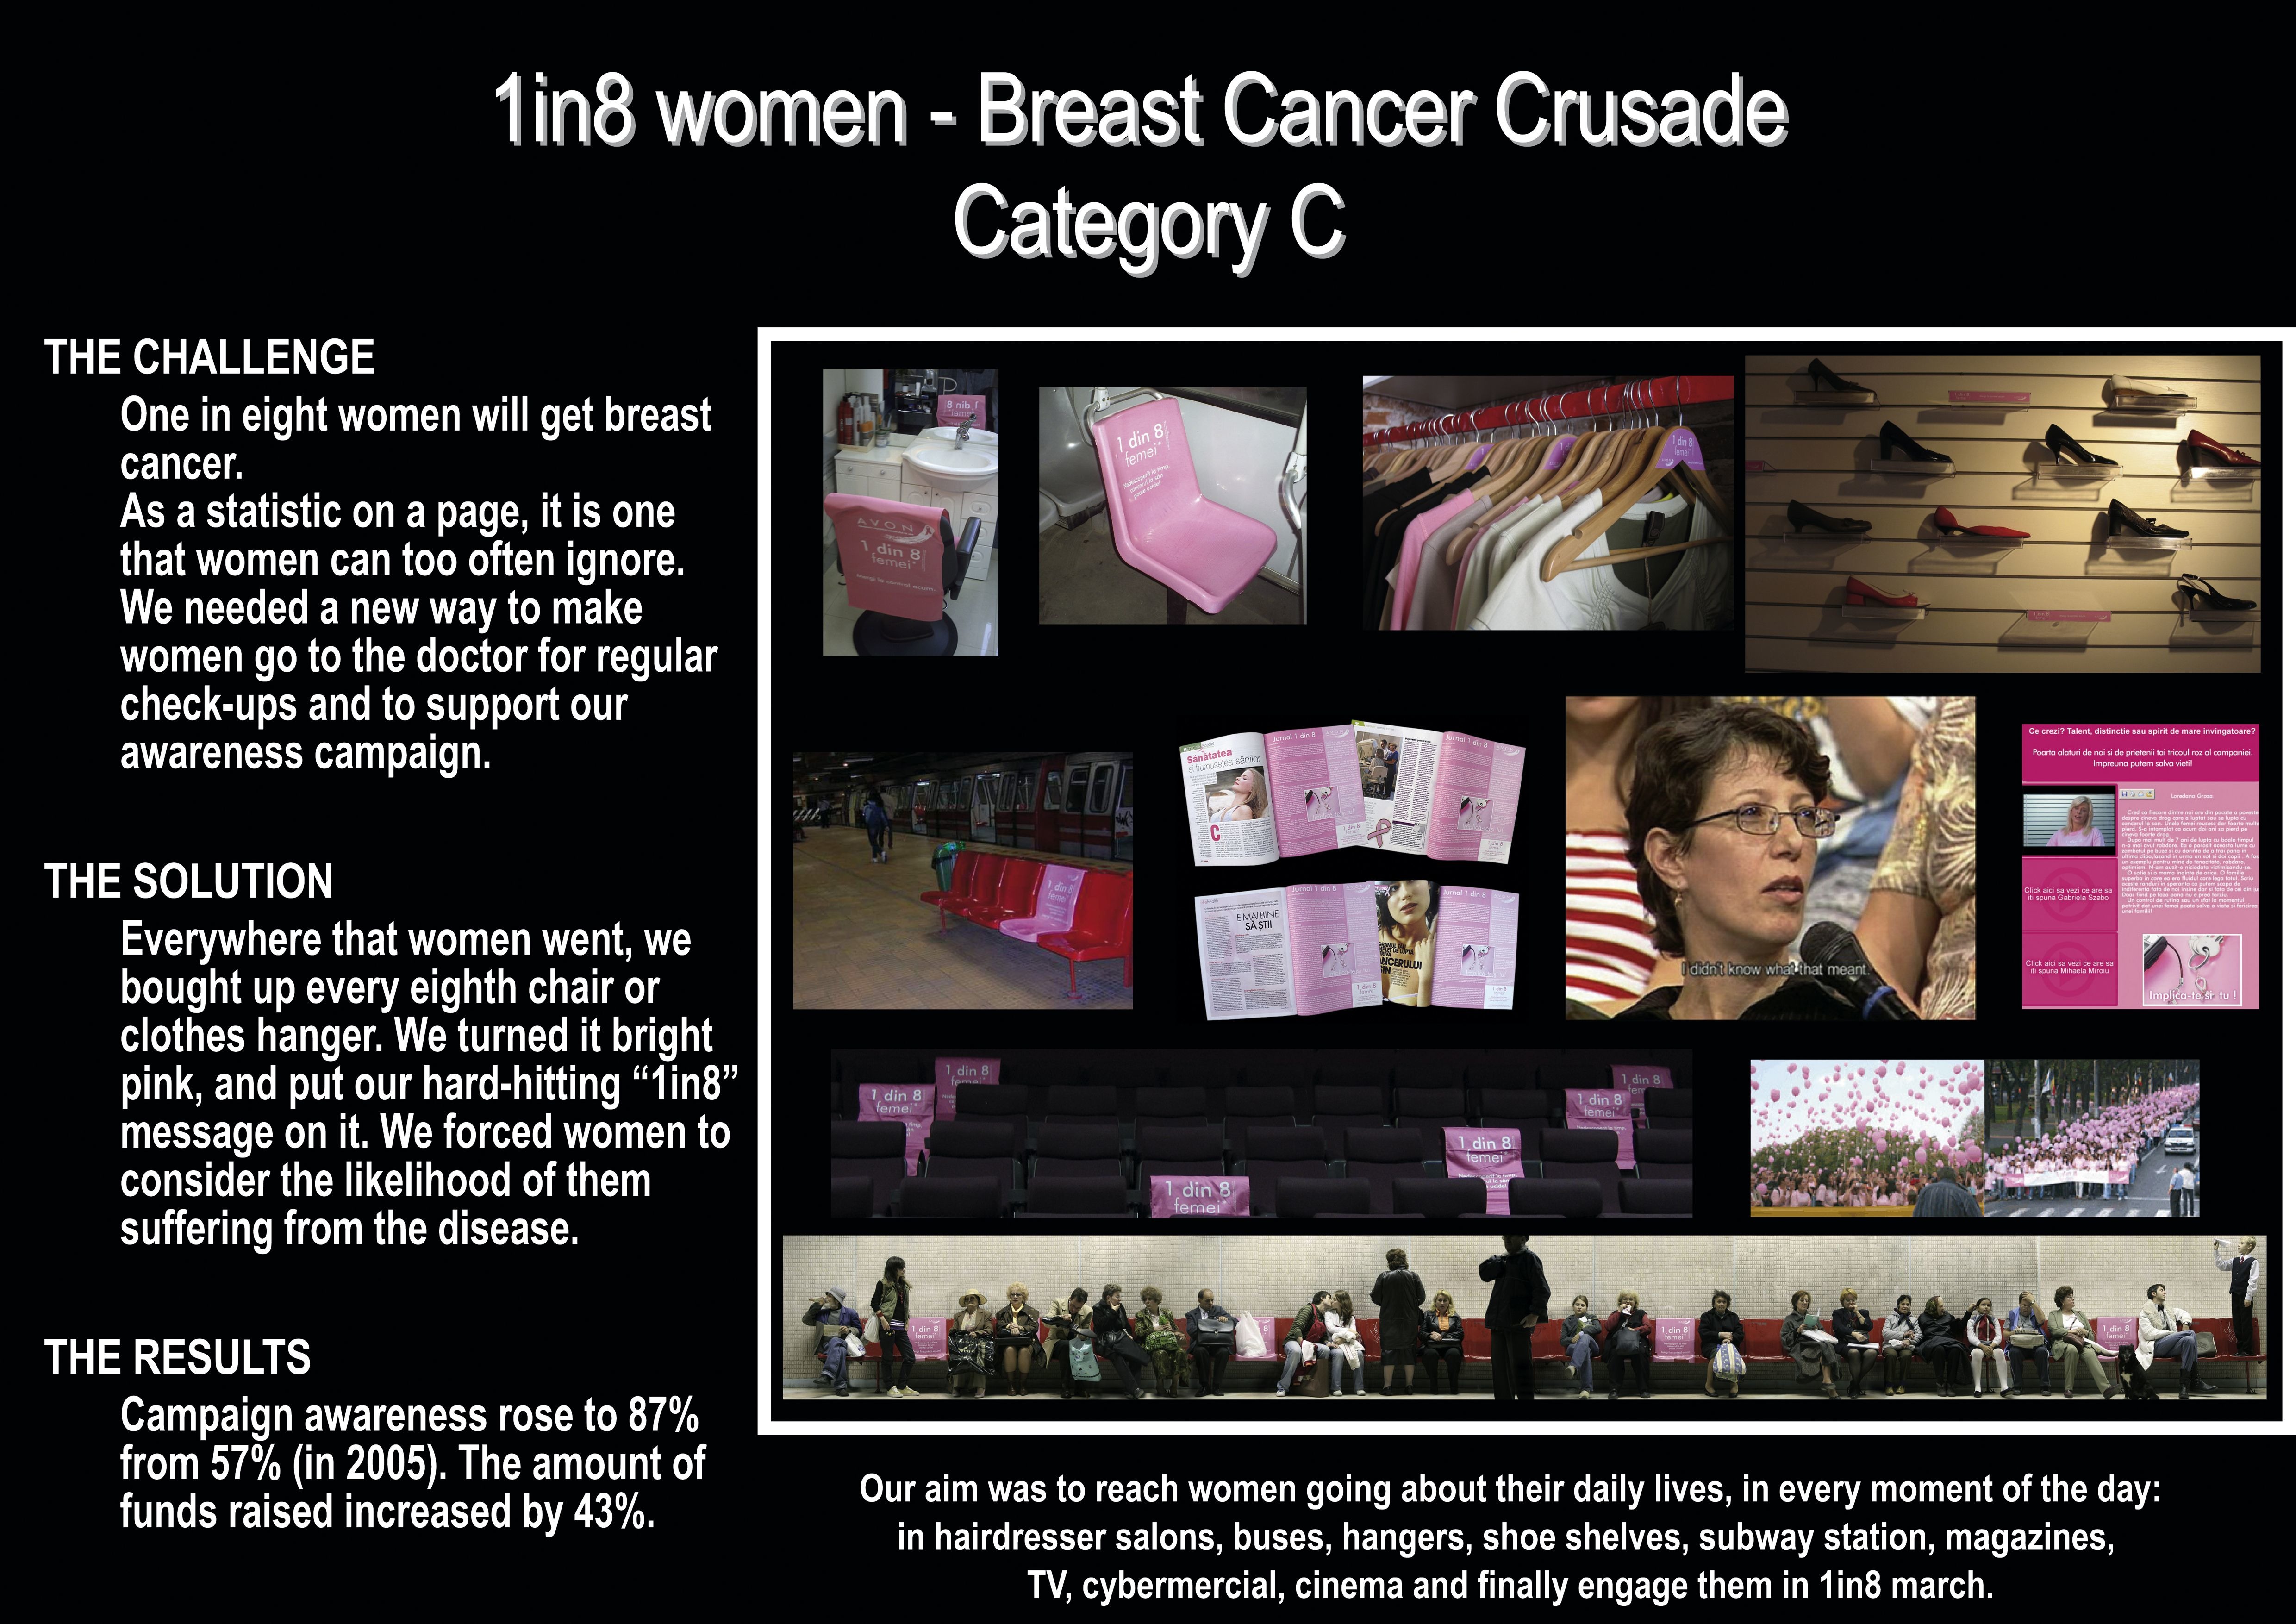 BREAST CANCER CRUSADE